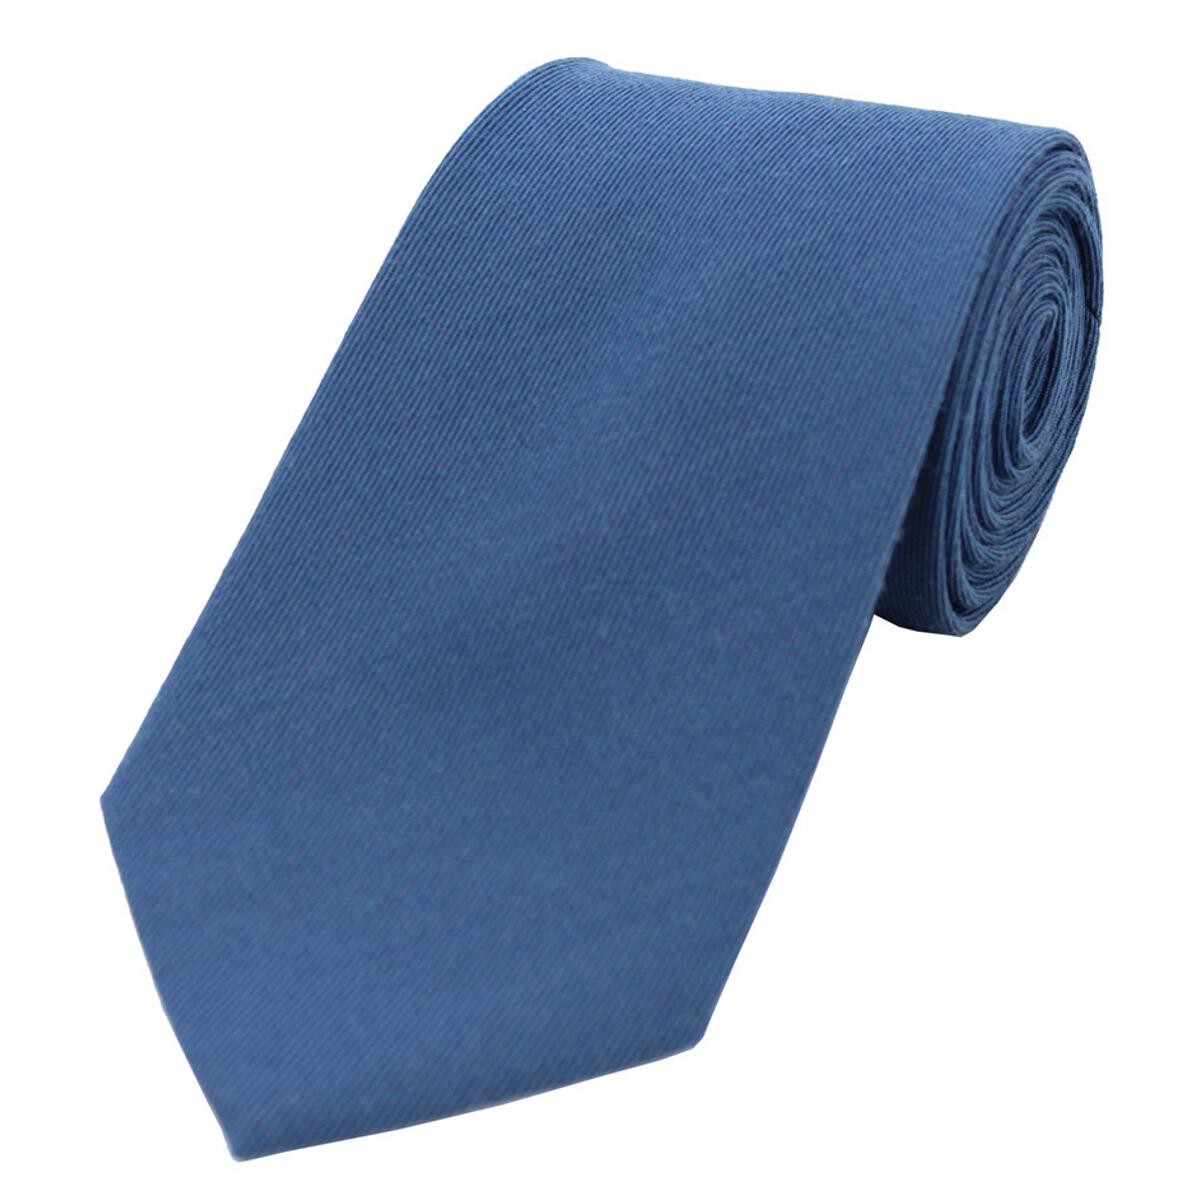 Soprano Accessories Plain Blue Wool Tie - Pediwear Accessories